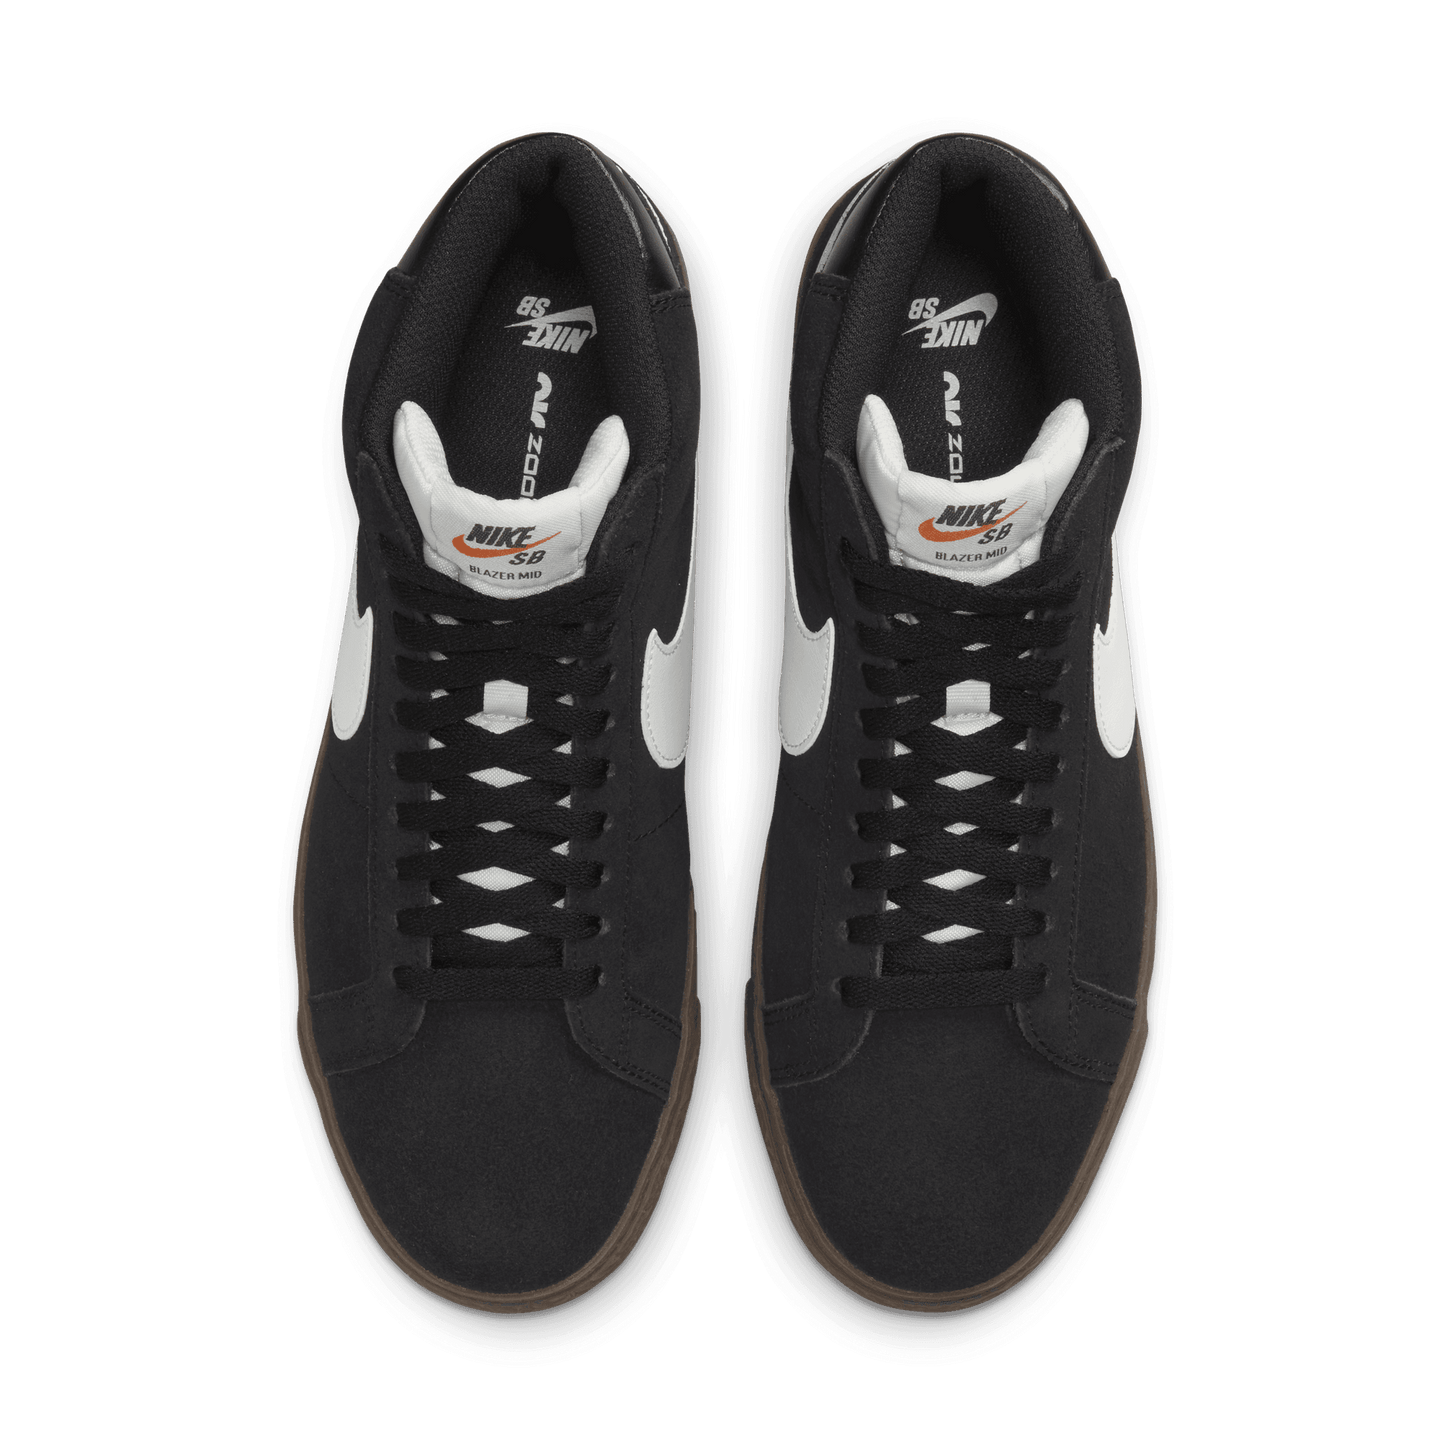 Nike SB Blazer Mid black white black sail